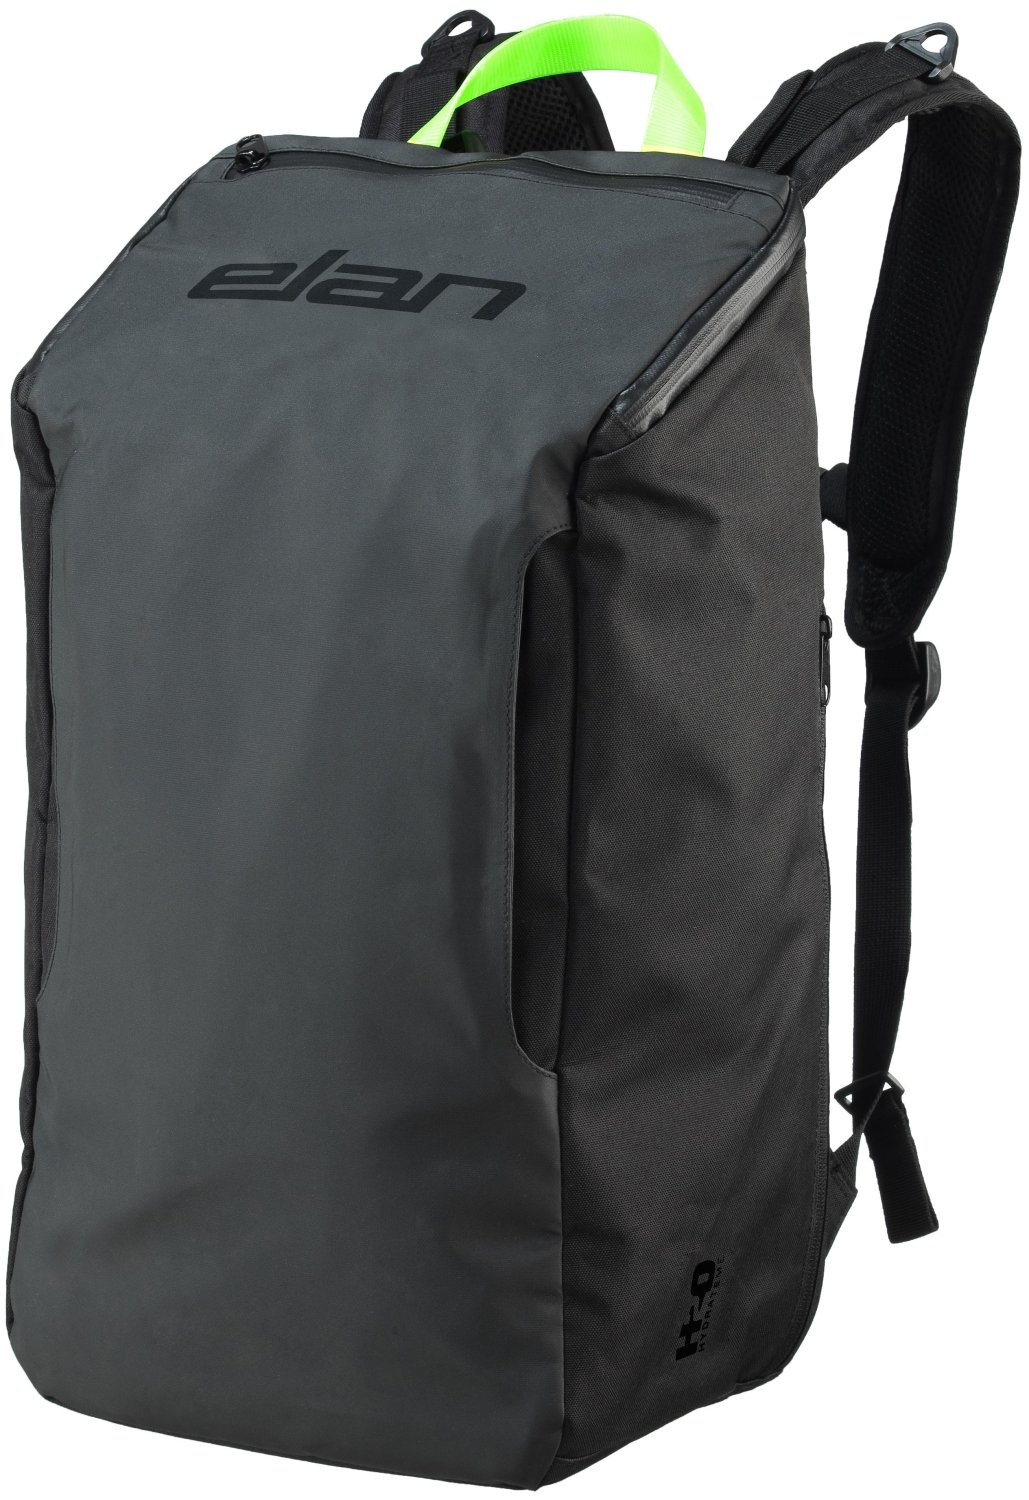 Рюкзак велосипедный ELAN AGT BACKPACK RACE, 25 л, 2020-21, CG592419 рюкзак для ноутбука tellur 15 6 notebook backpack companion usb port gray